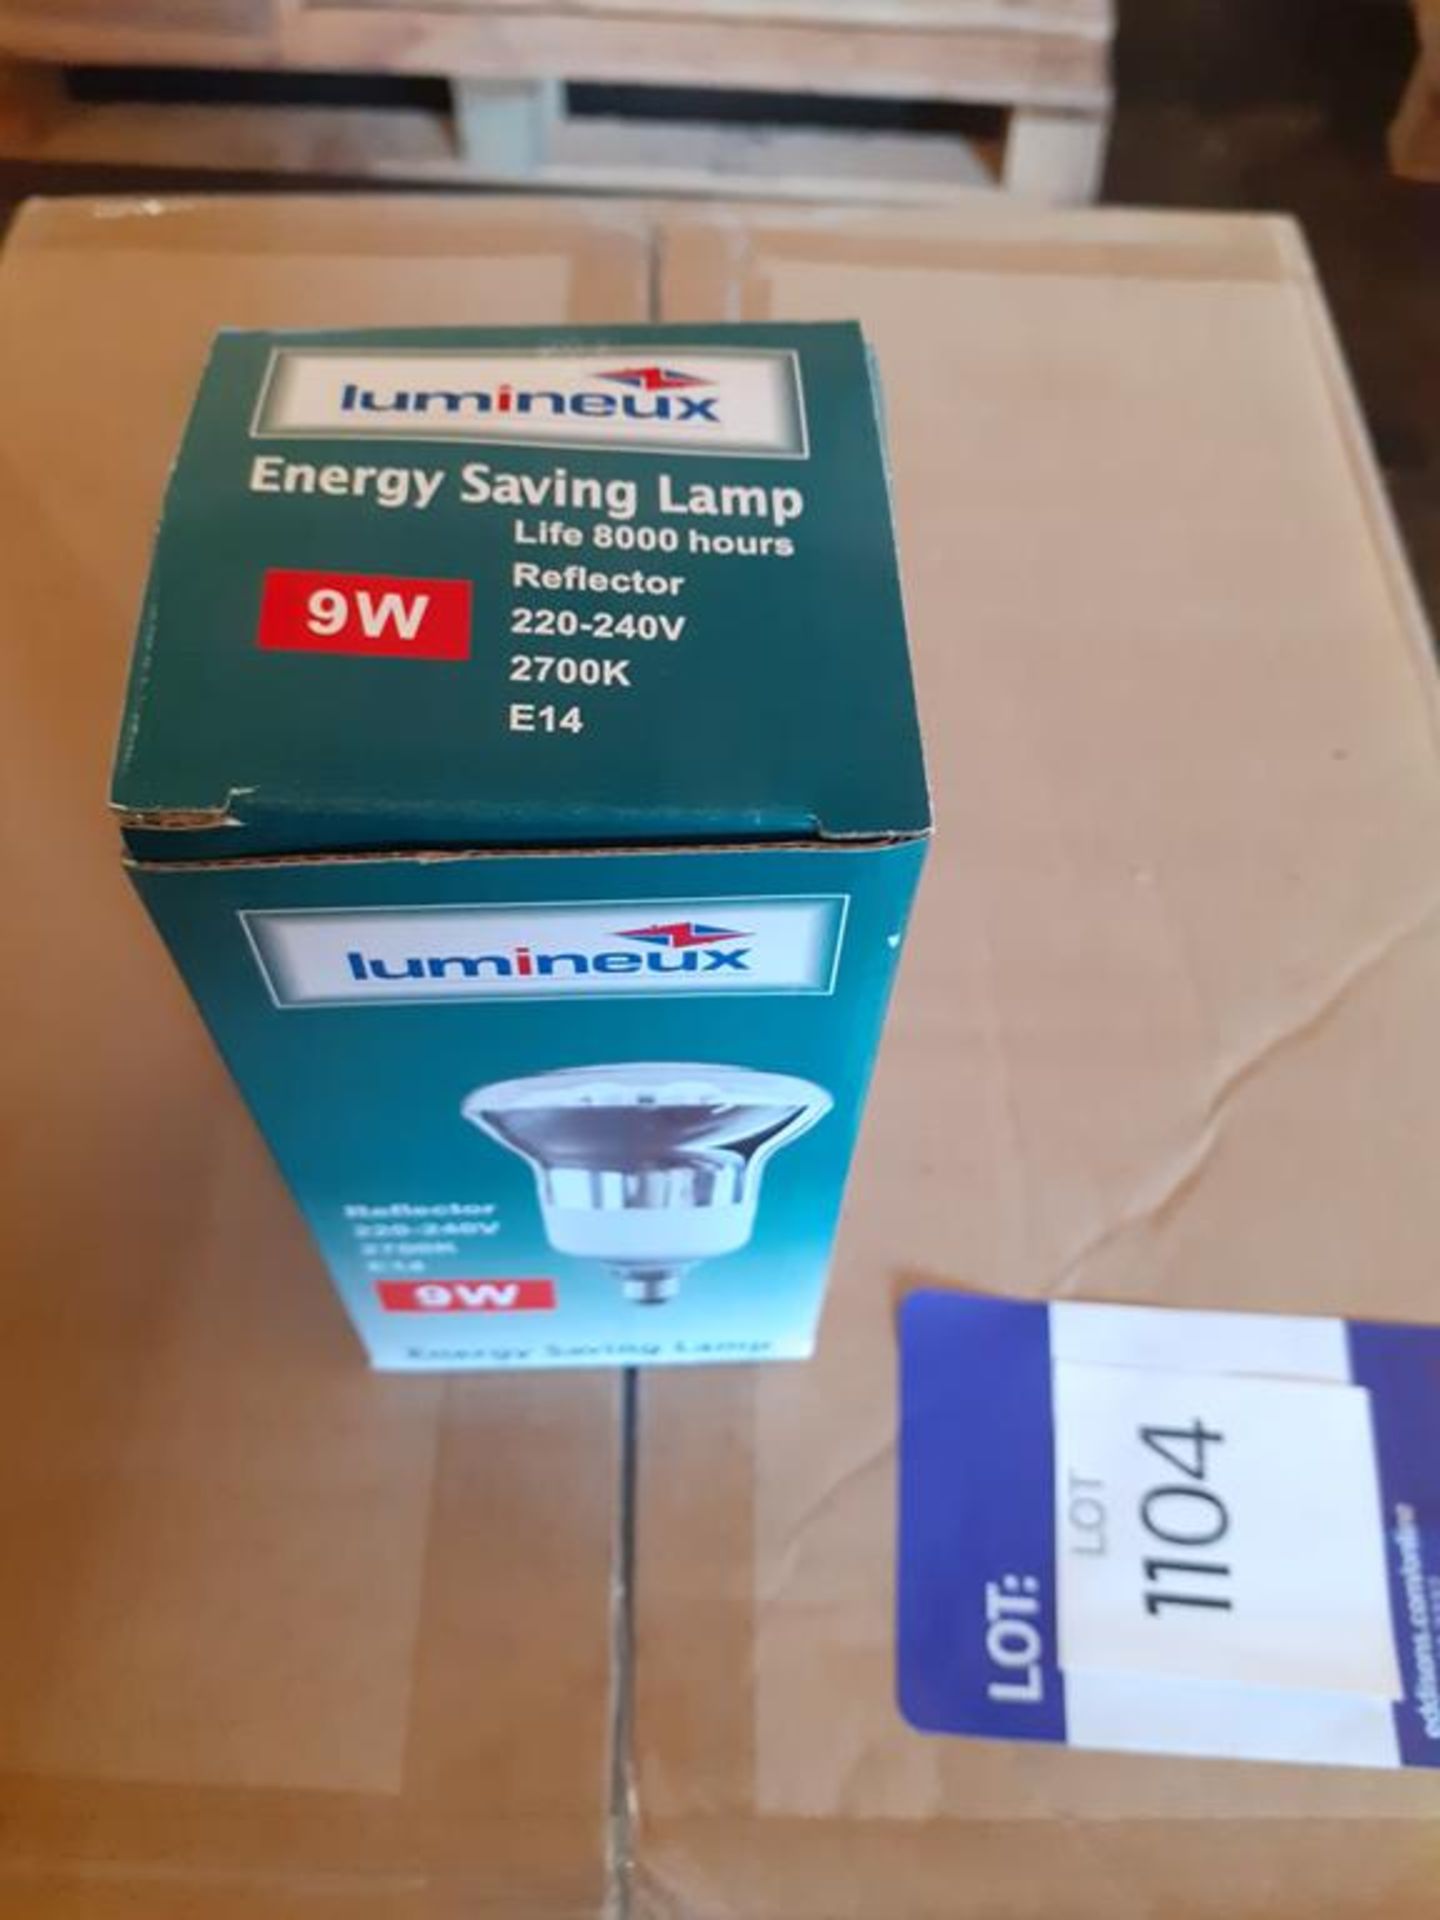 6x boxes of Lumineux Reflector 7W E14 2700K 220-240V Engery Saving Bulbs (40pcs per box) - Image 3 of 5